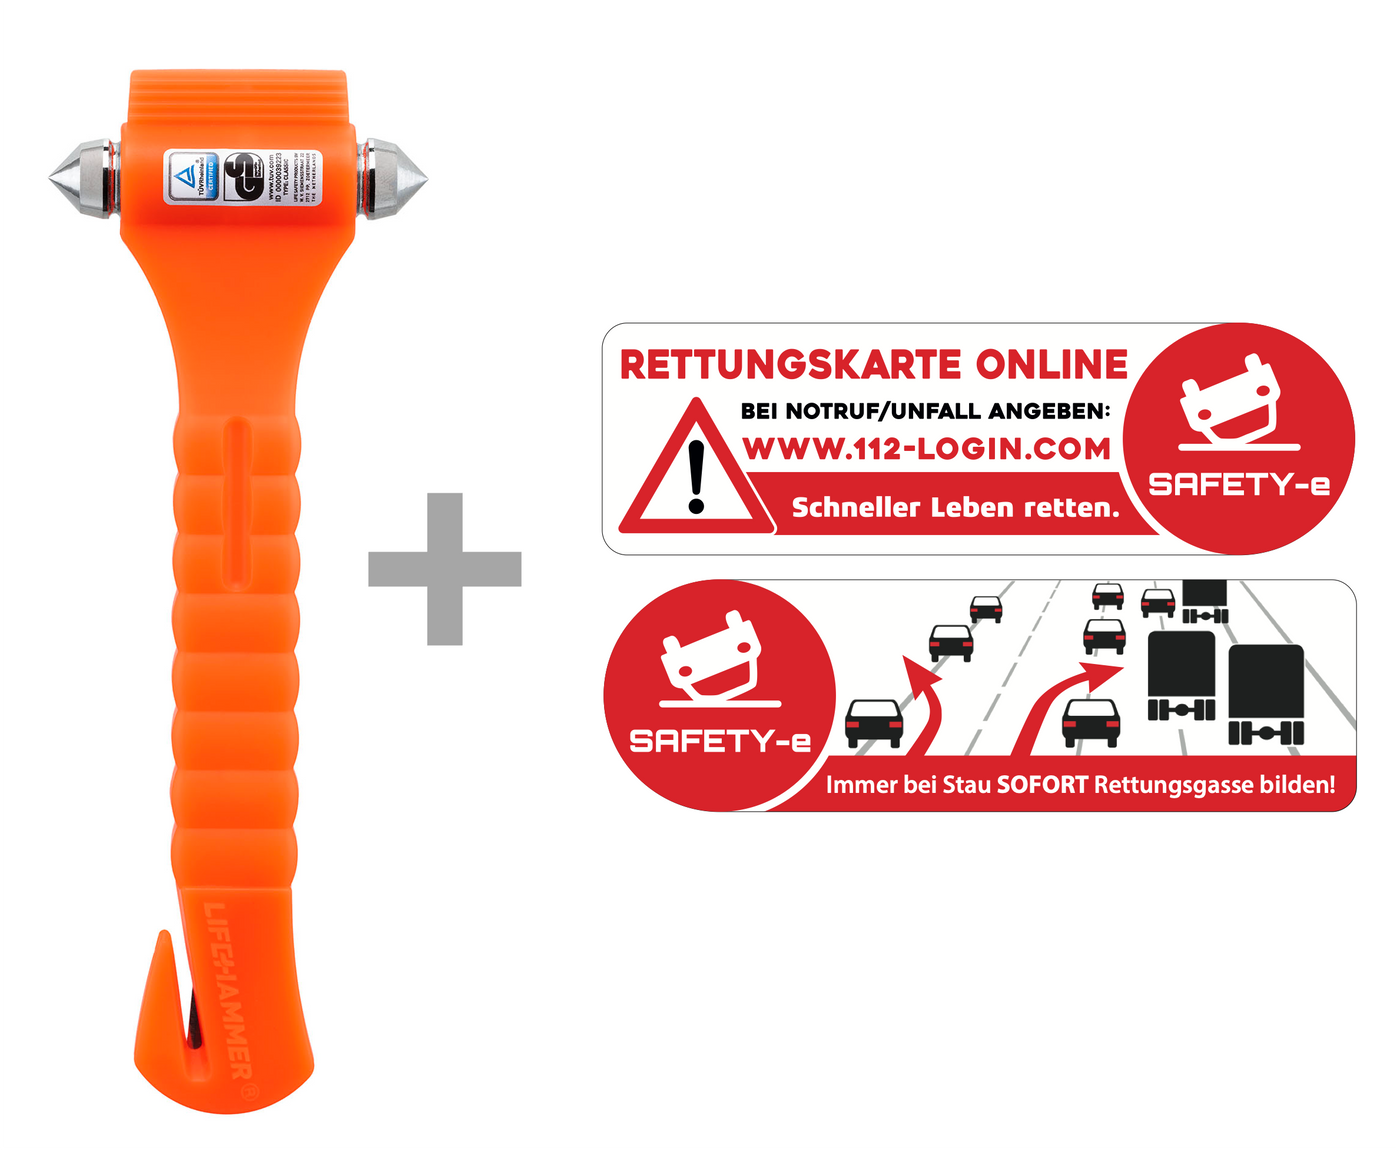 RESQ.SET: SAFETY-e digitale Rettungskarte inkl. Lifehammer (Notfallhammer)